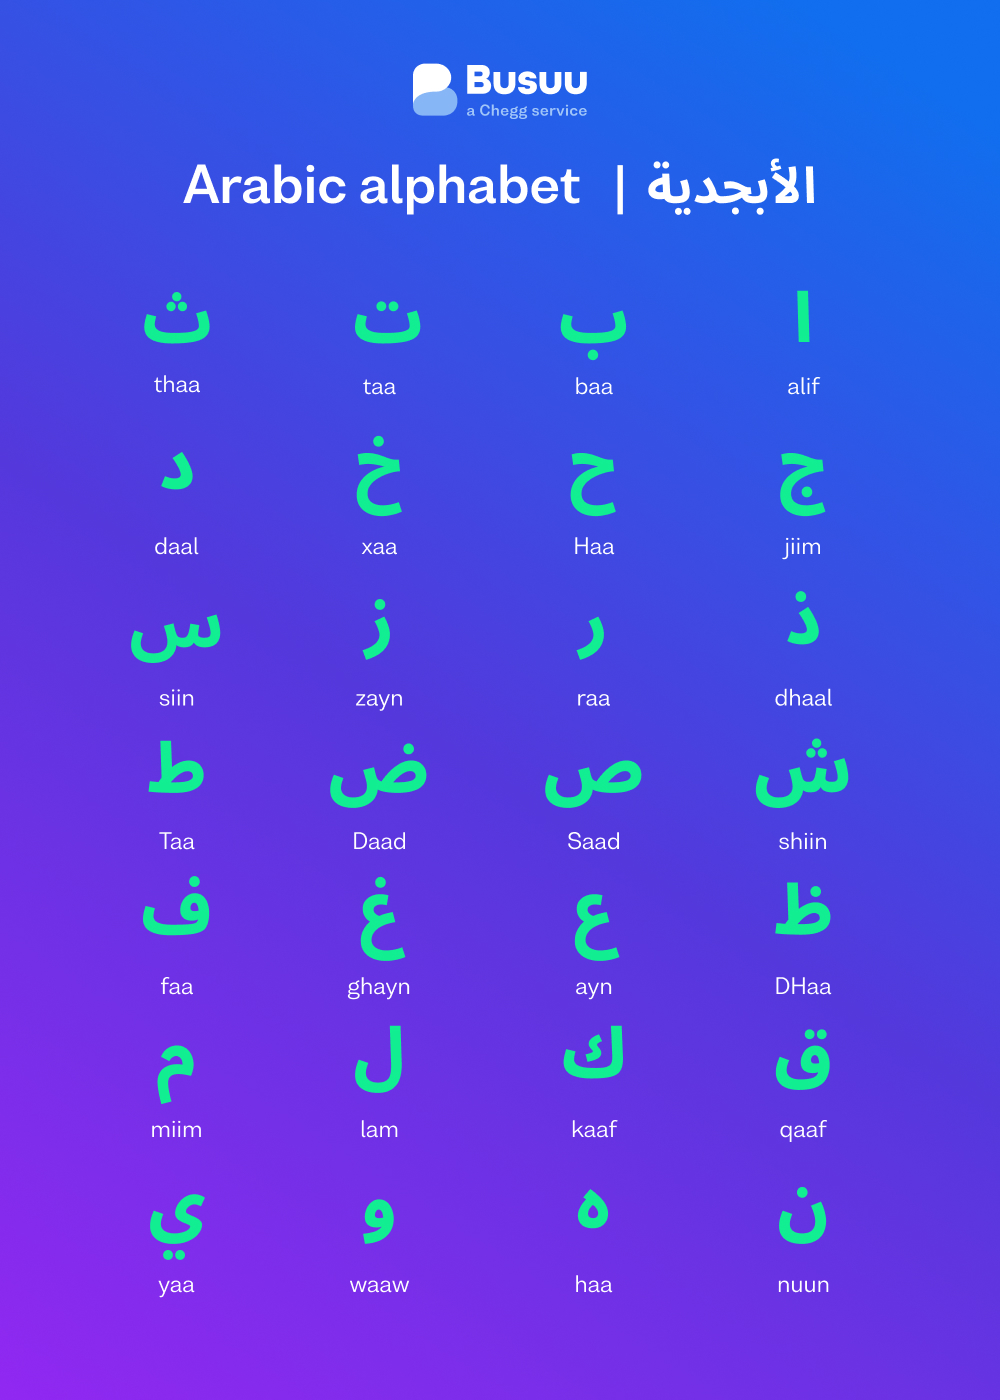 Arabic Alphabet: All the Letters Explained - Busuu